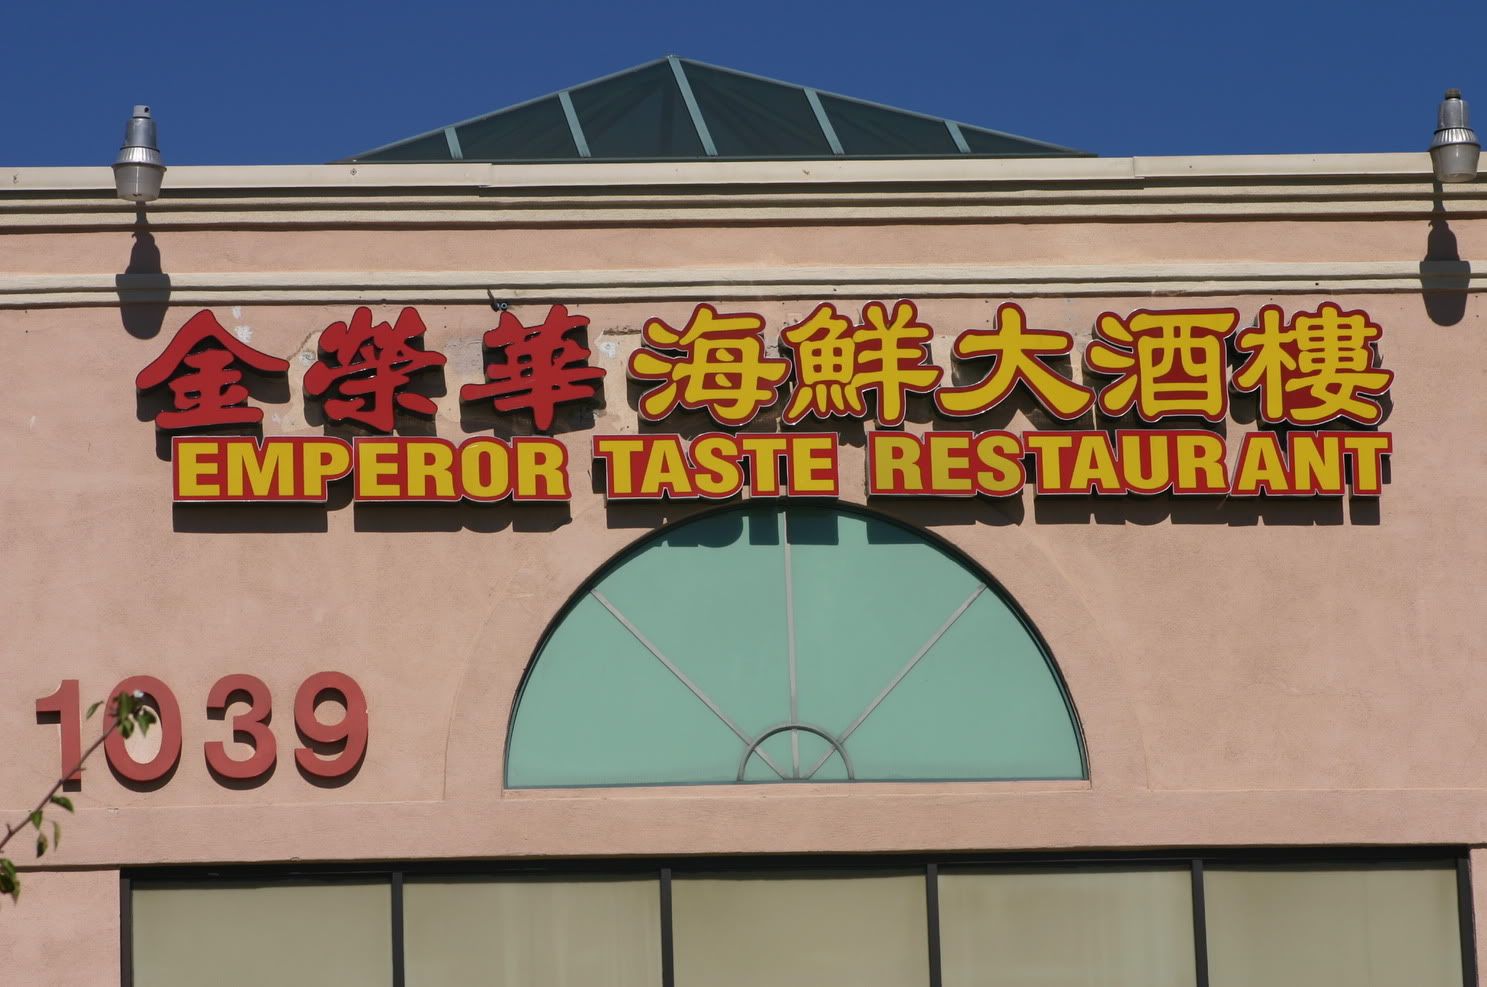 Emperor Taste Restaurant